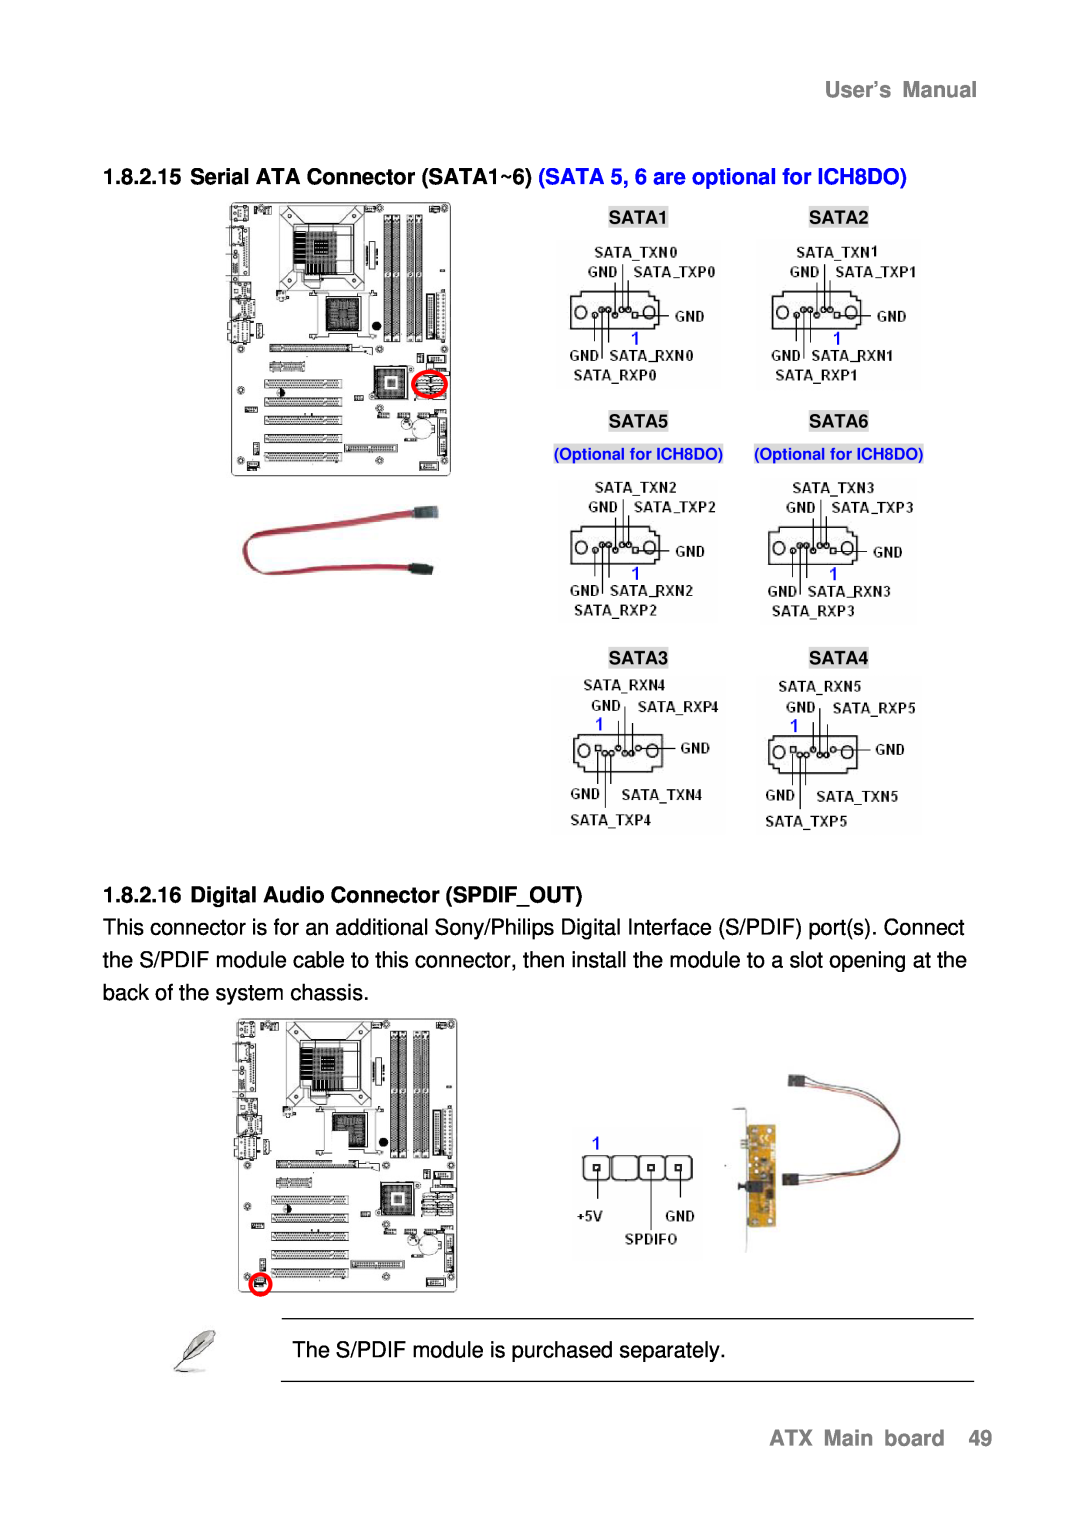 Intel AX965Q user manual Digital Audio Connector SPDIFOUT, User’s Manual, ATX Main board 